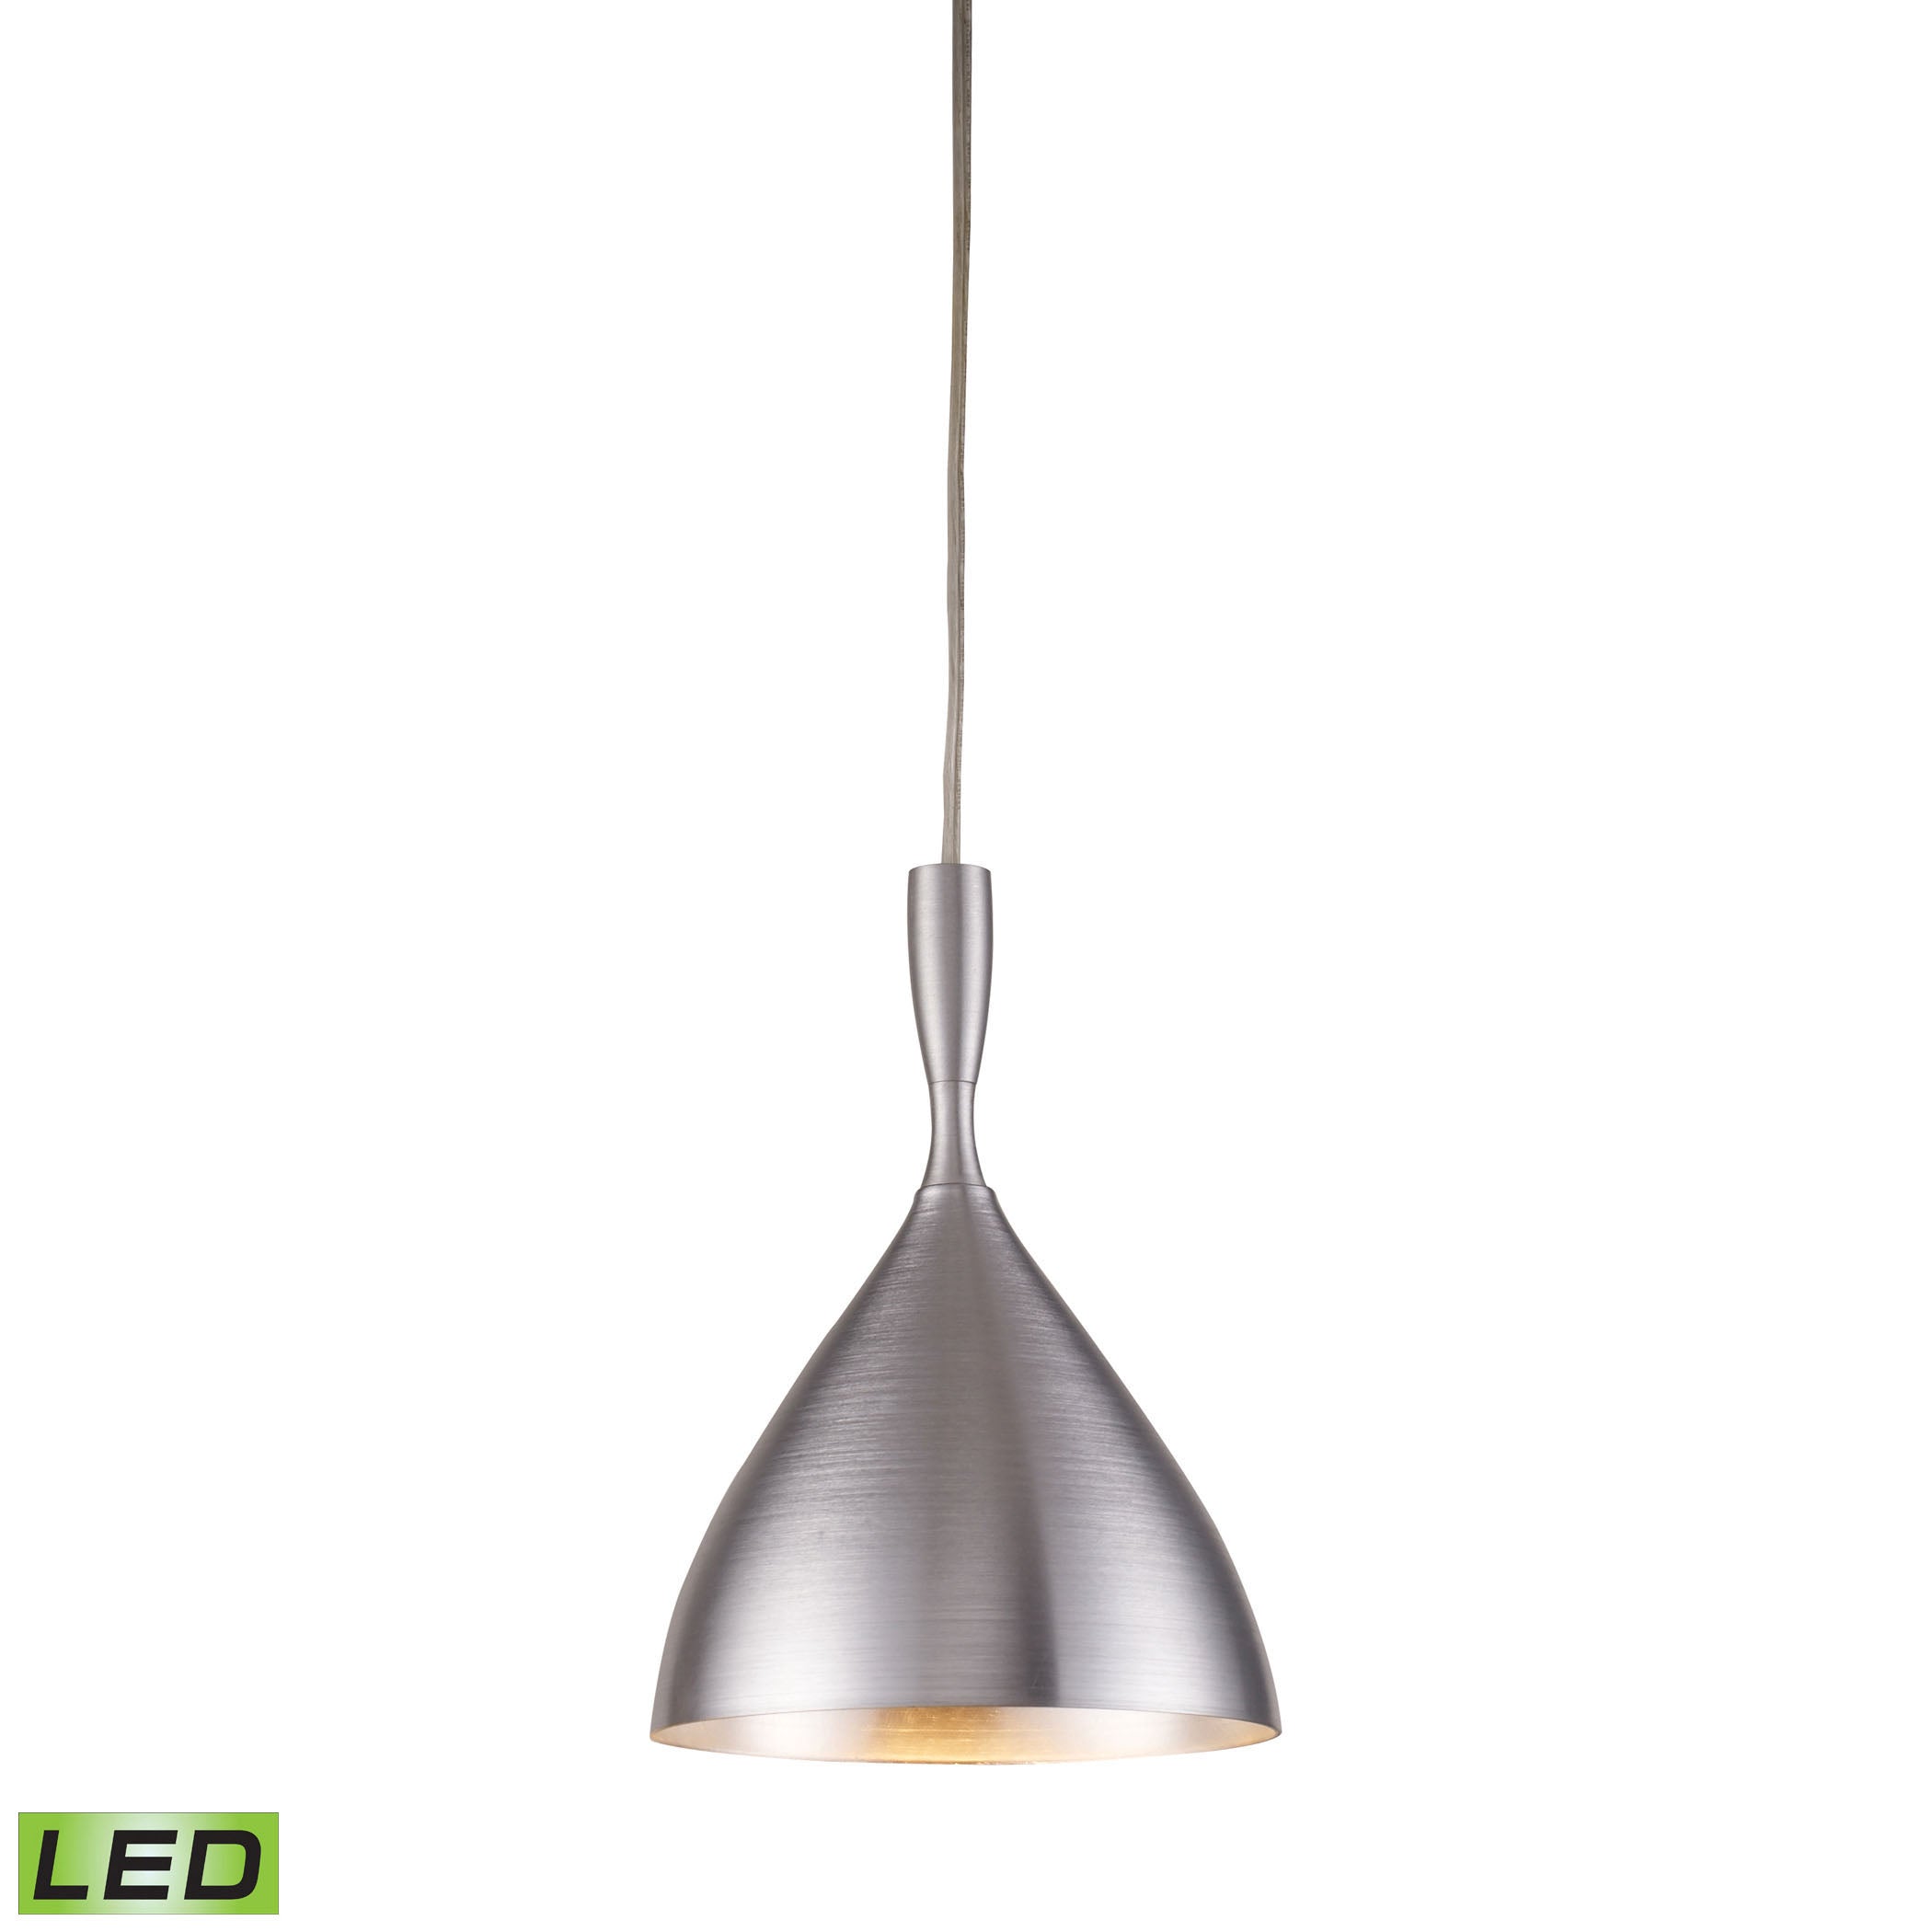 ELK Lighting 17042/1ALM-LED Spun Aluminum 1-Light Mini Pendant in Aluminum with Matching Shade - Includes LED Bulb